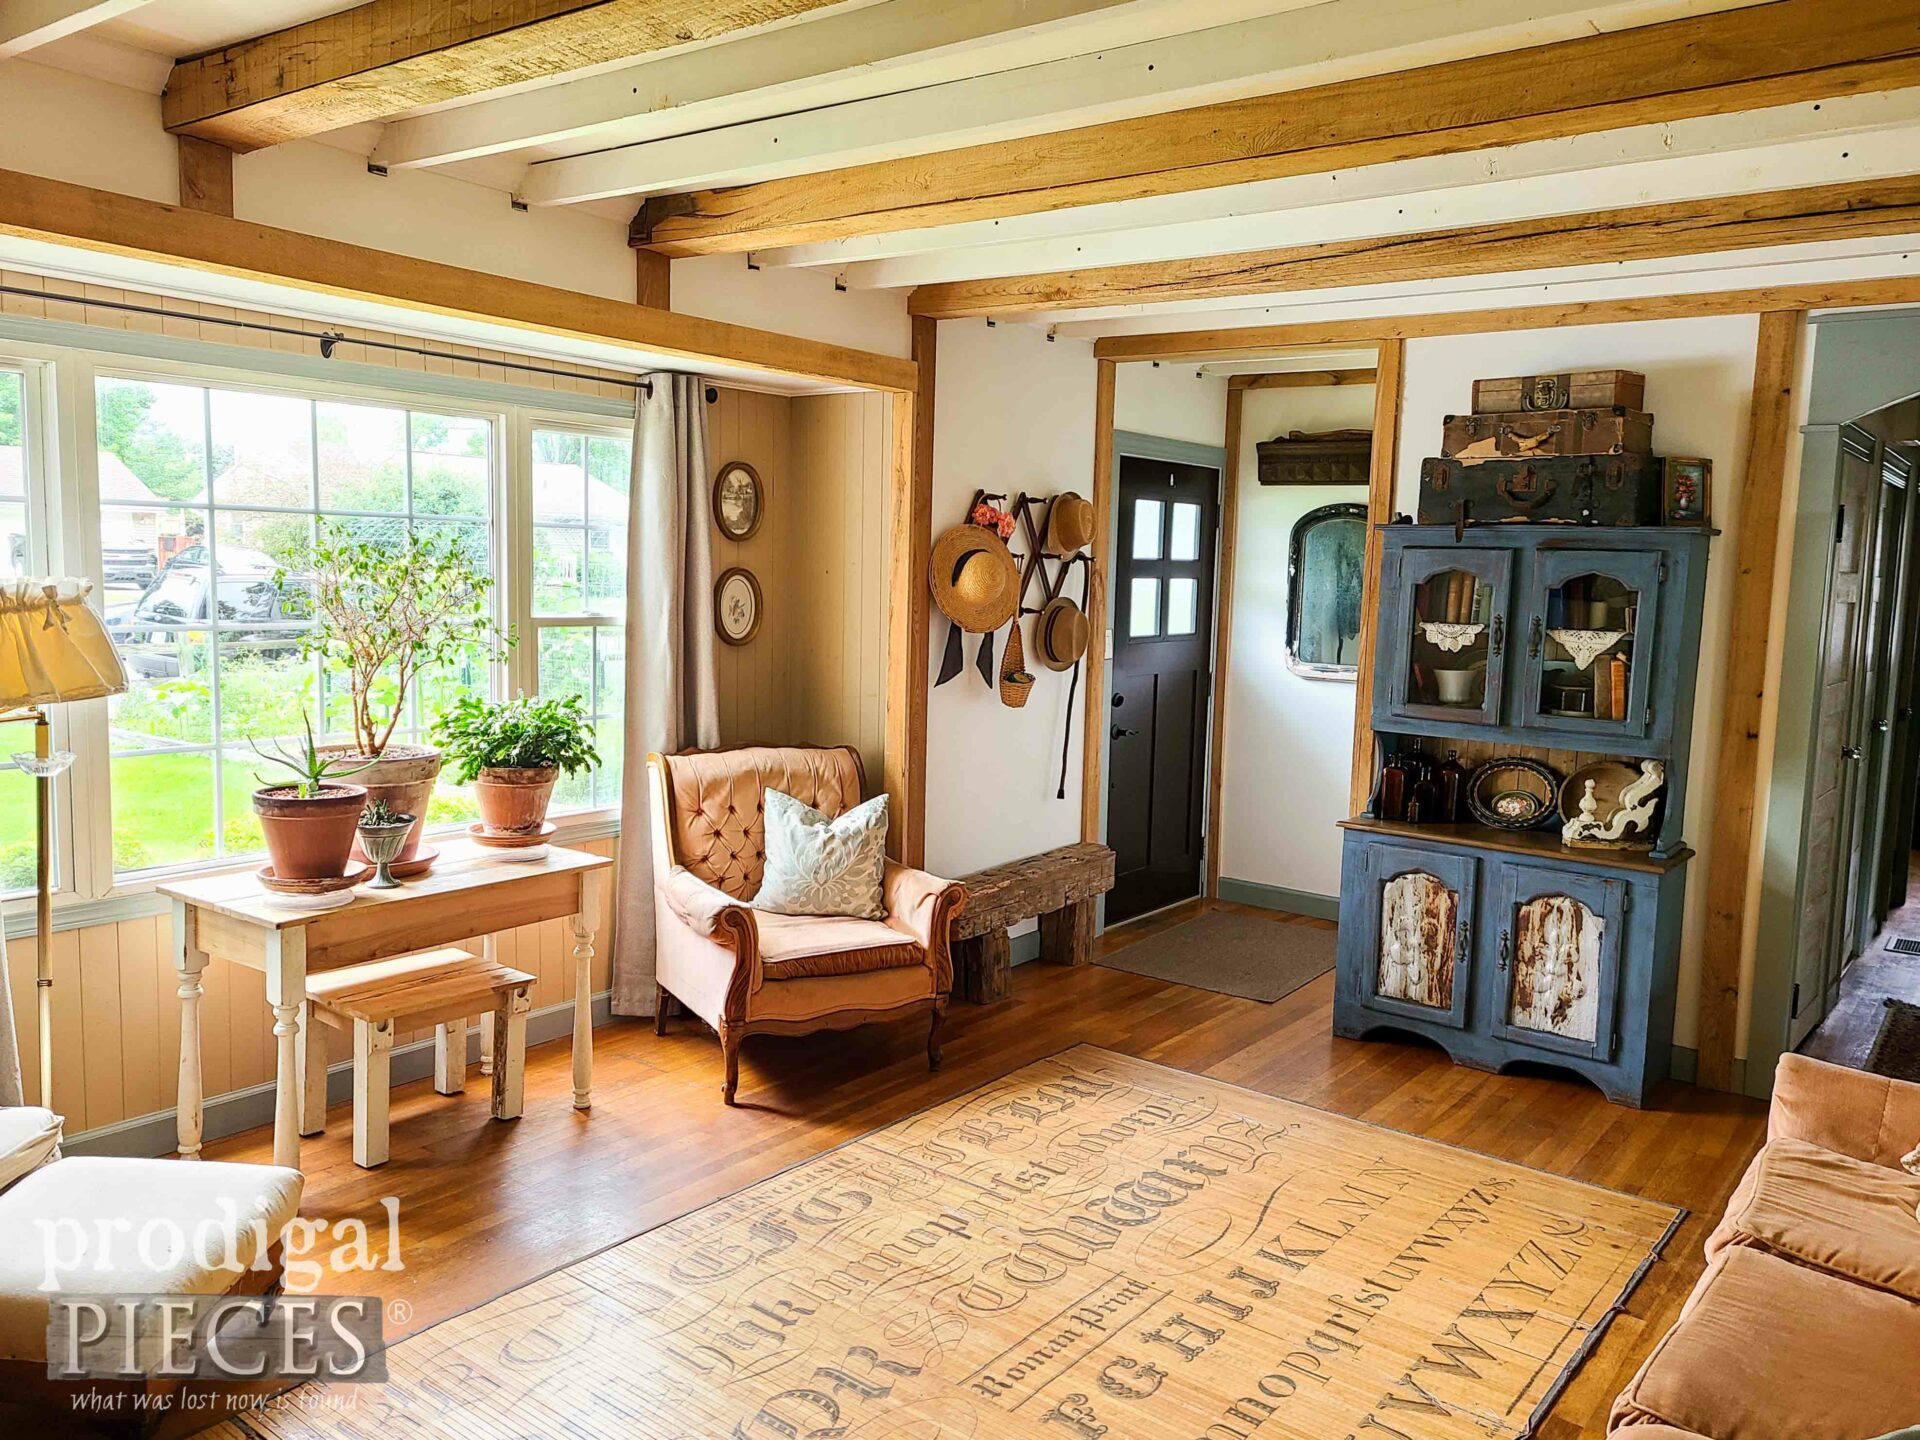 DIY Living Room Remodel by Larissa of Prodigal Pieces | prodigalpieces.com #prodigalpieces